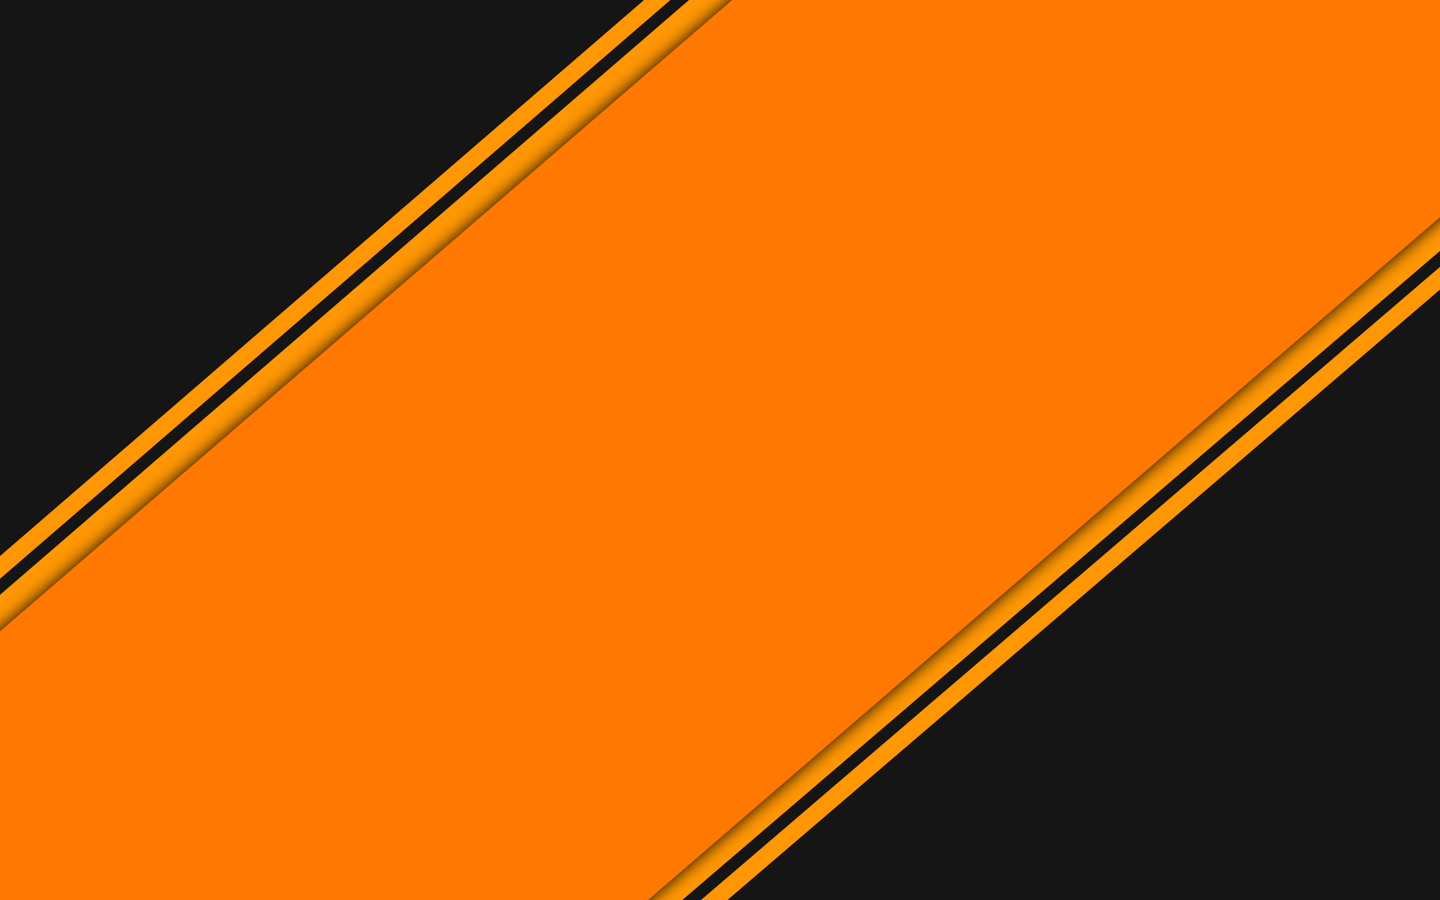 Bias orange stripe on a black background